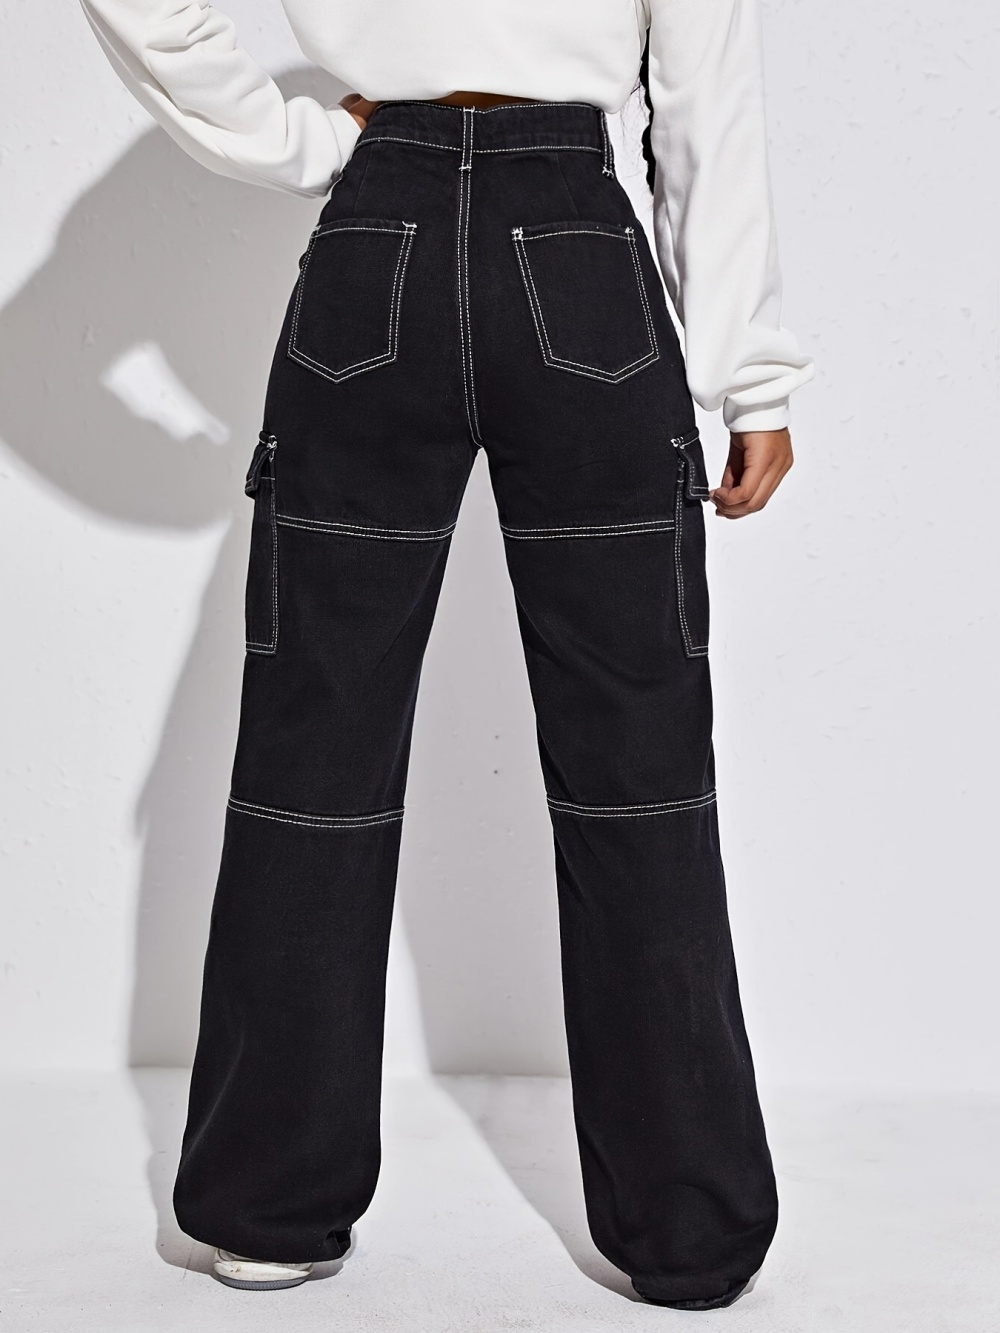 Straight black pants pocket jeans for women